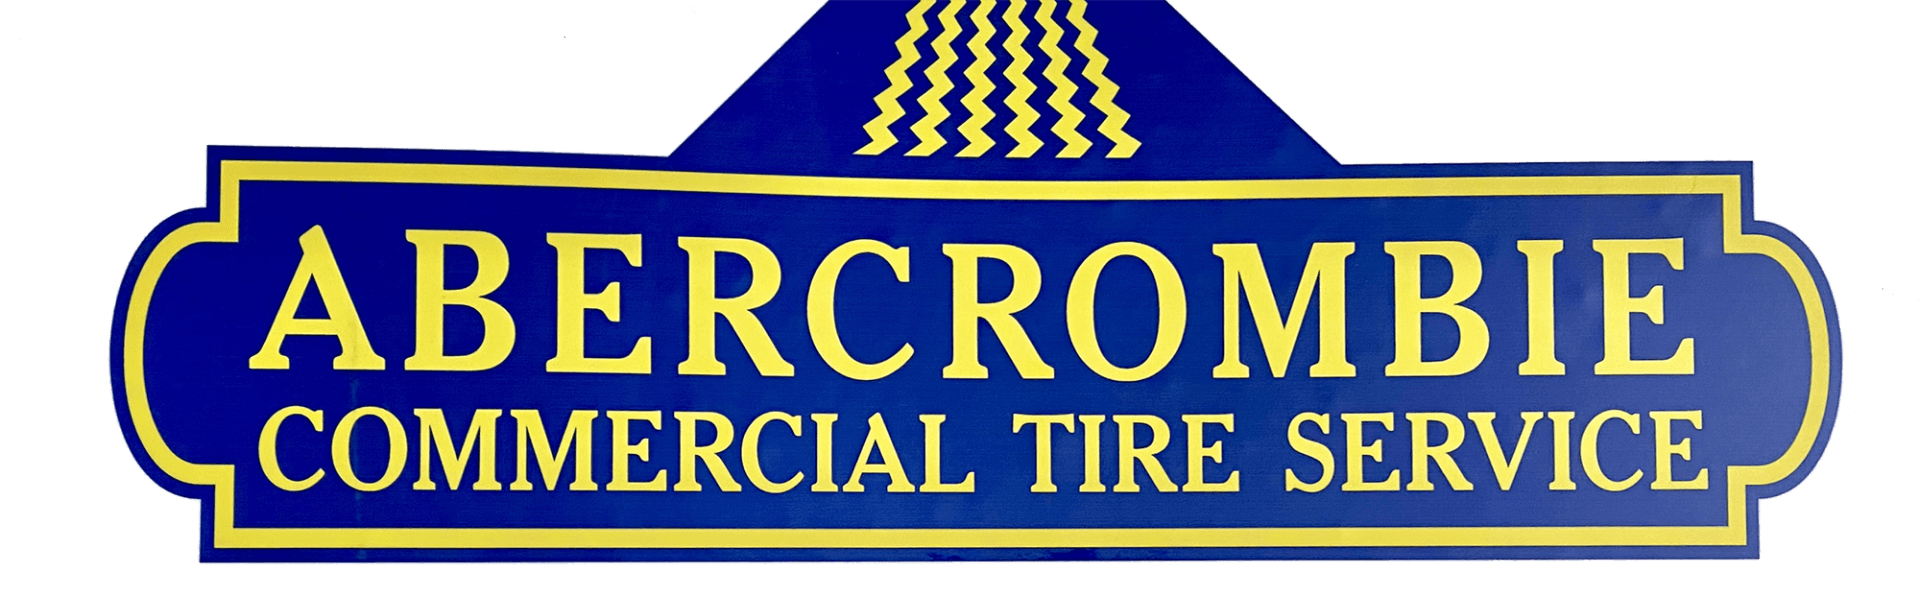 Abercrombie Commercial Tire Service LLC logo